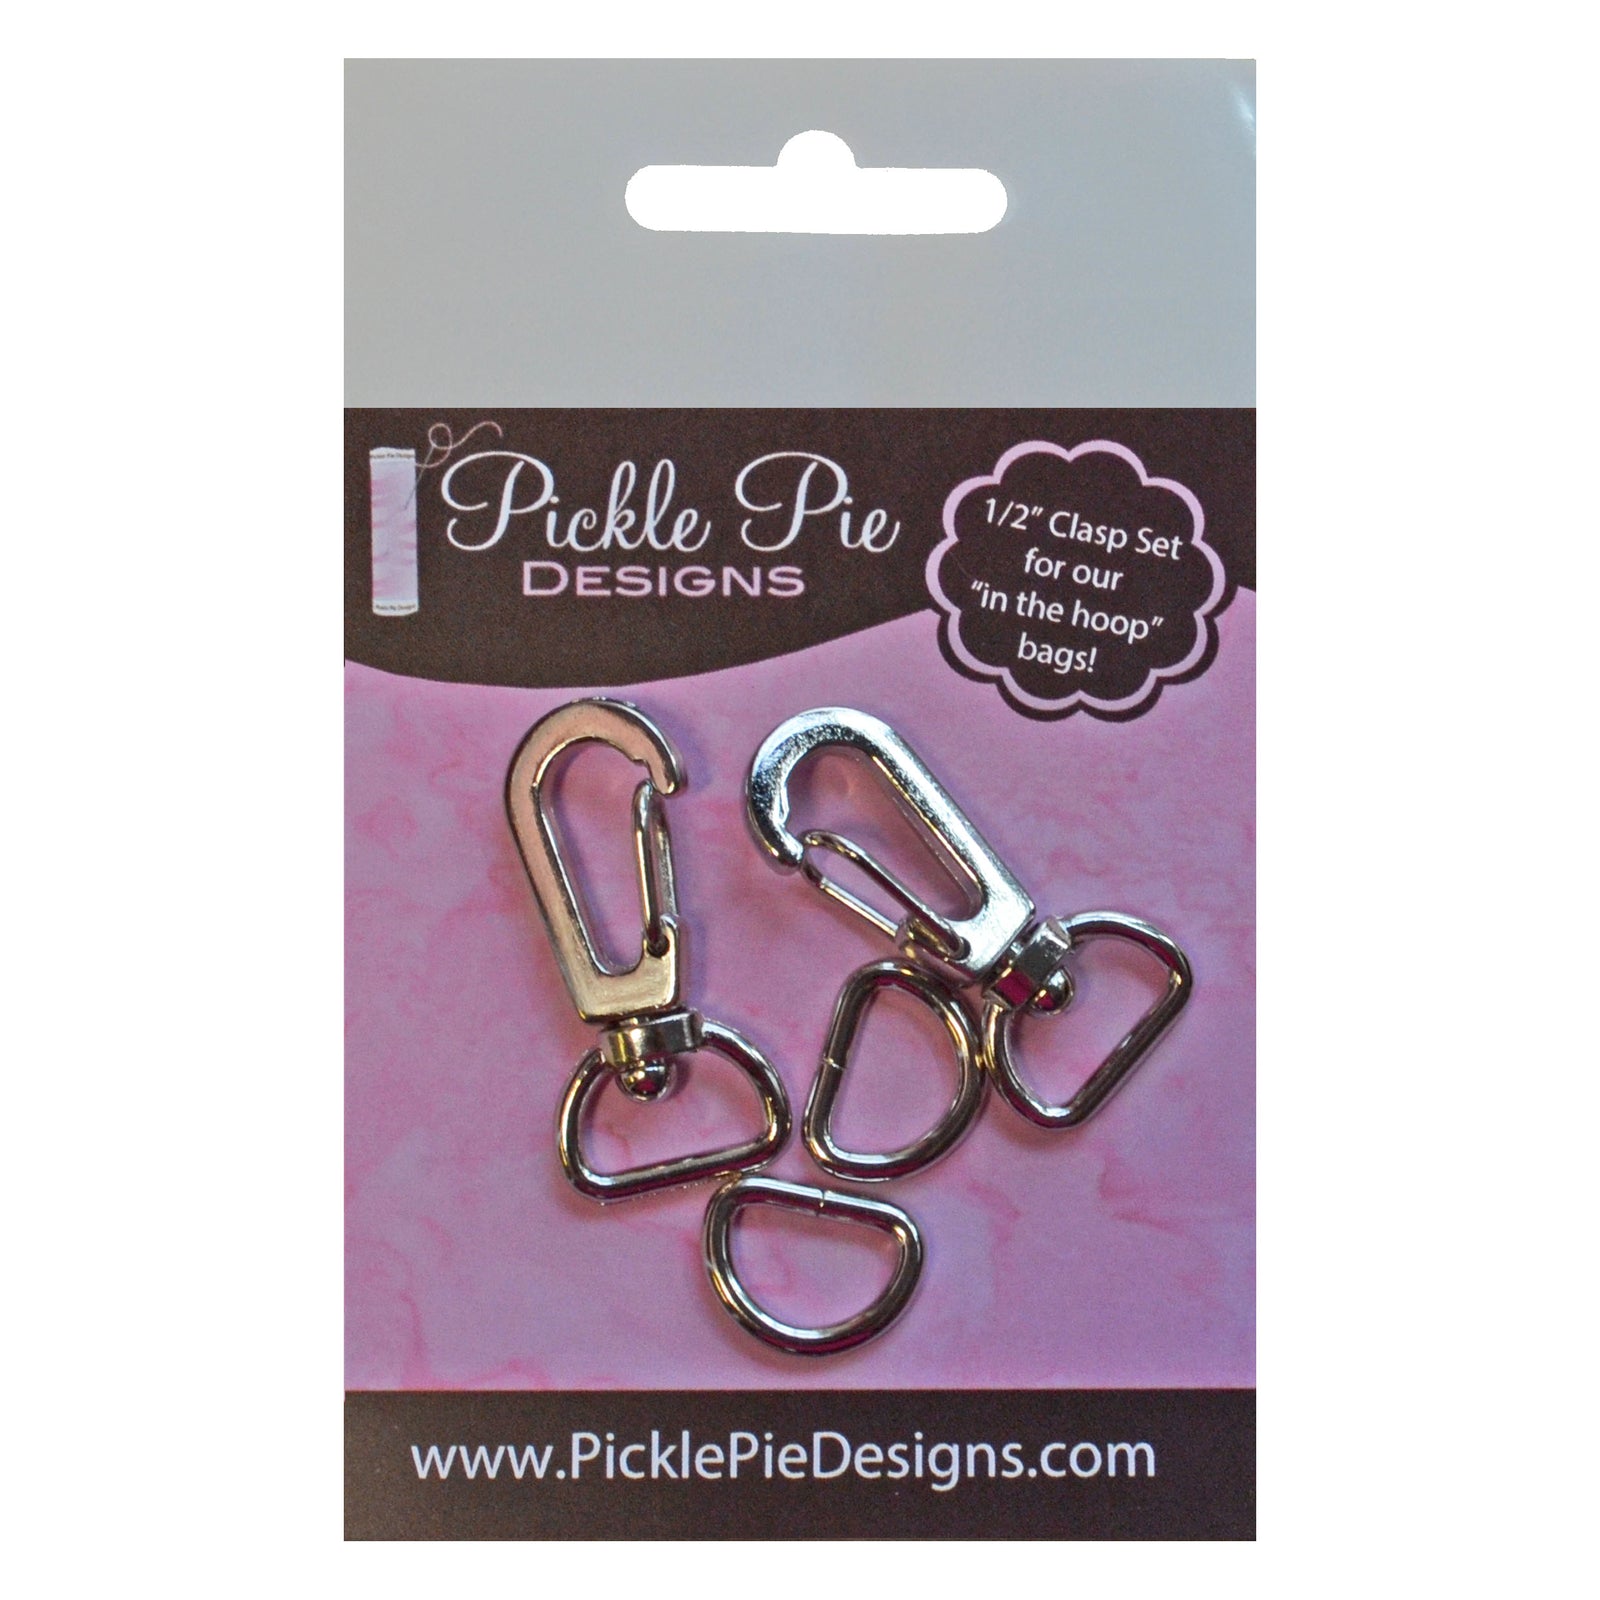 Duckbill Applique Scissors 4 inch by Pickle Pie Designs